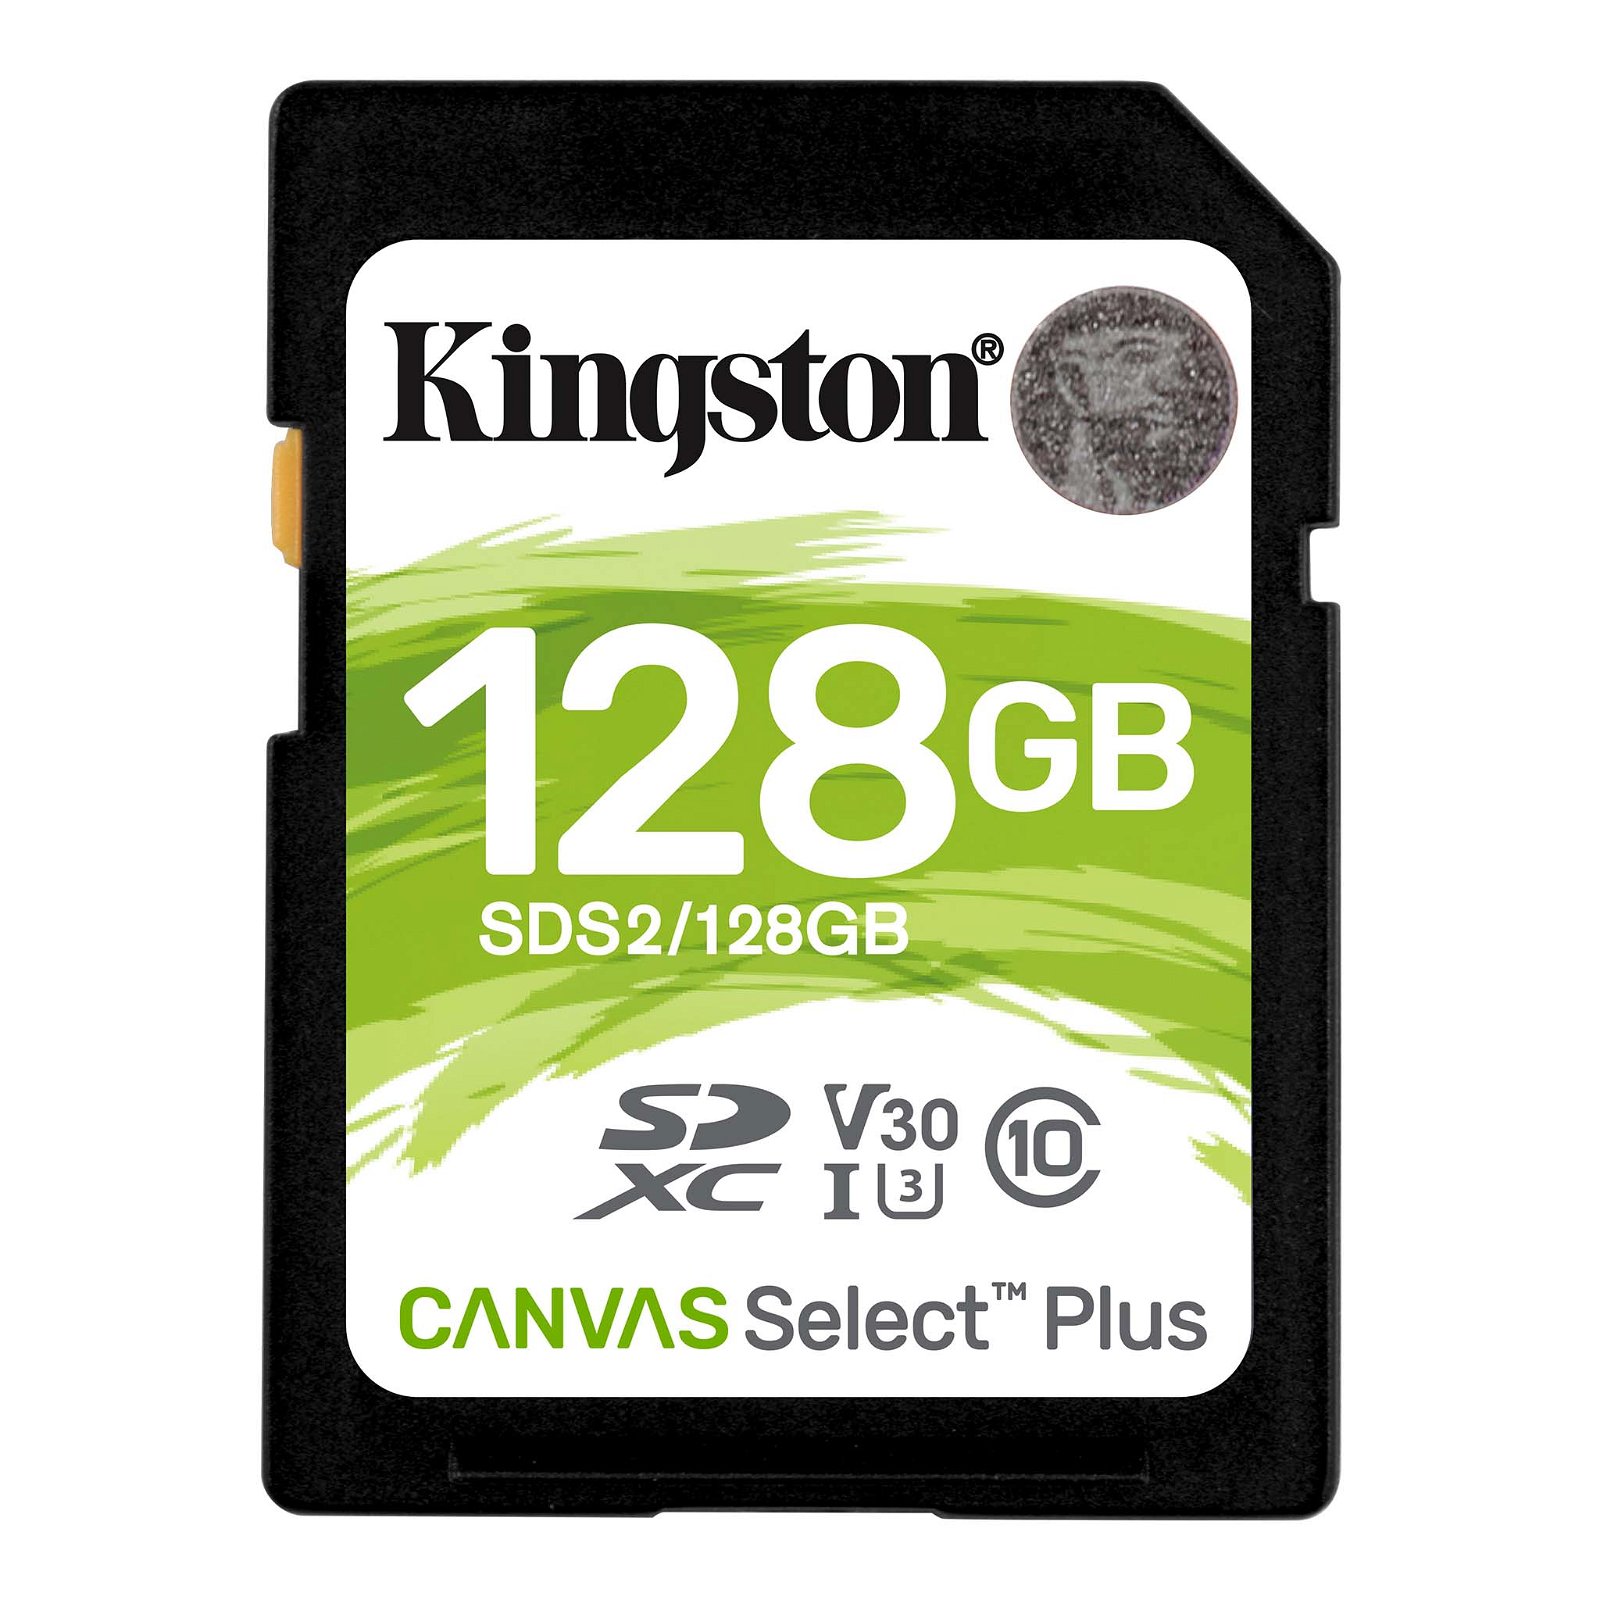 Kingston Canvas Select Plus 128GB UHS-1 SDXC Memory Card